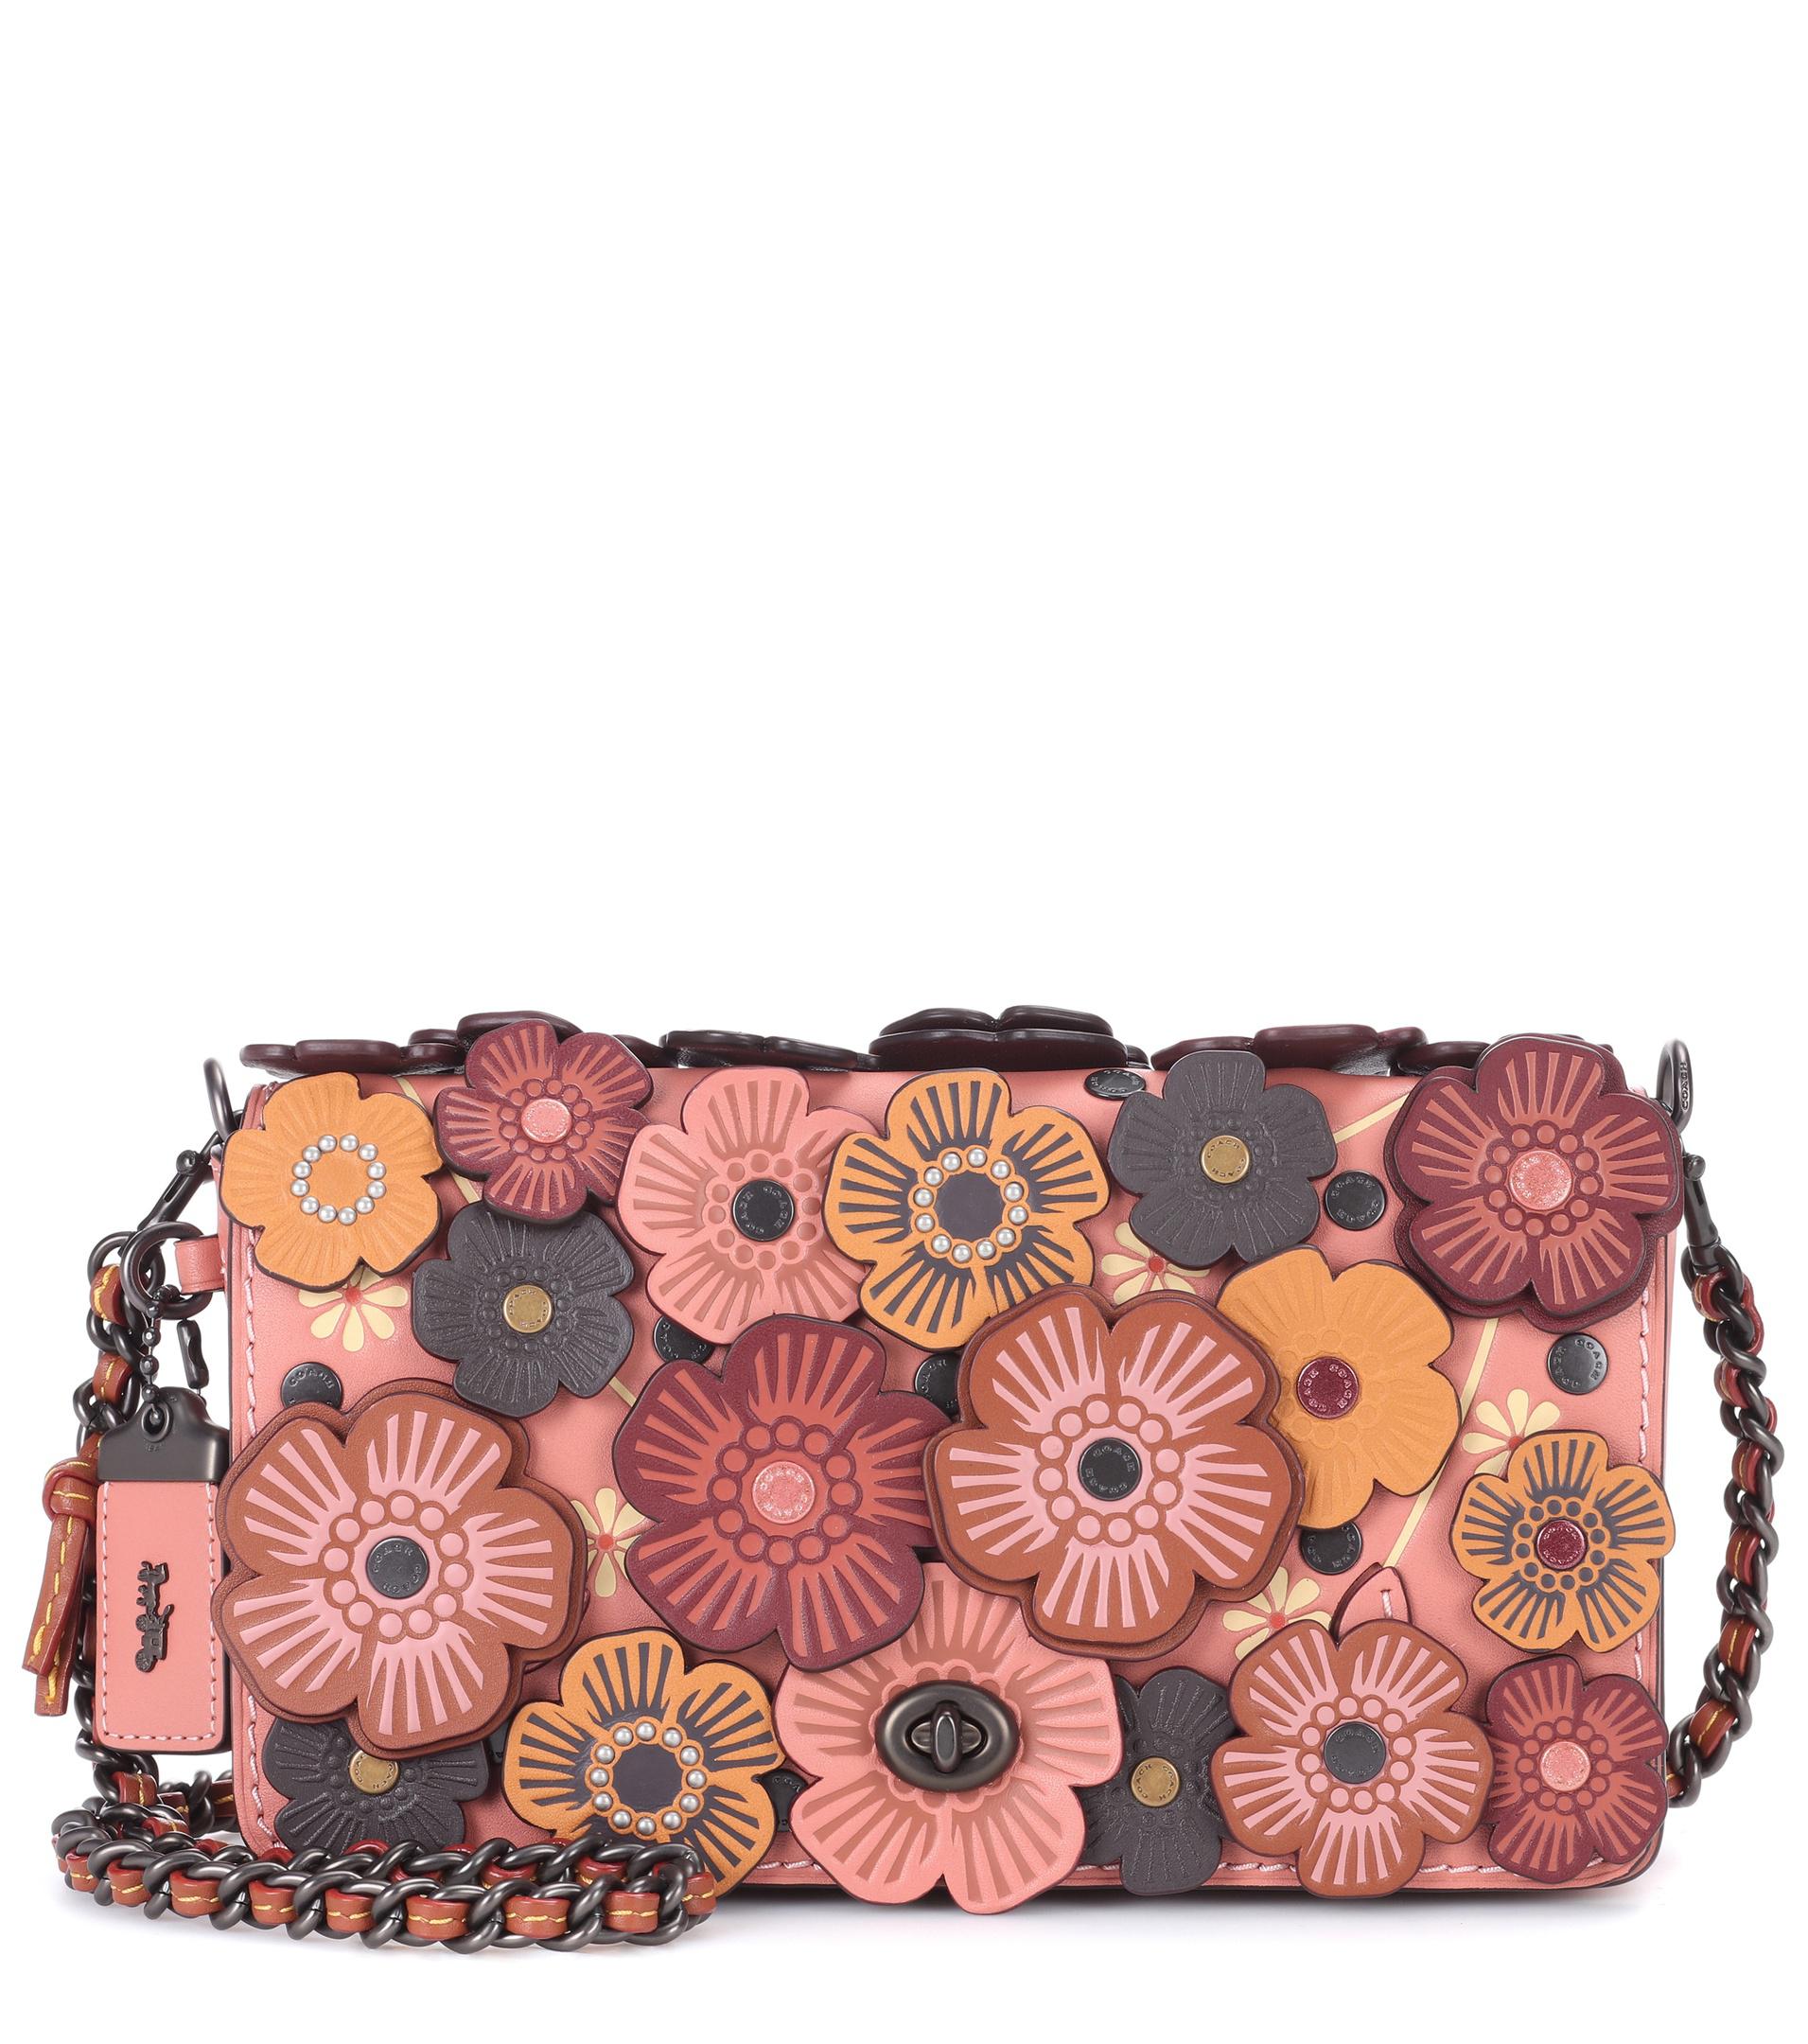 COACH Dinky Floral Leather Shoulder Bag in Pink - Lyst